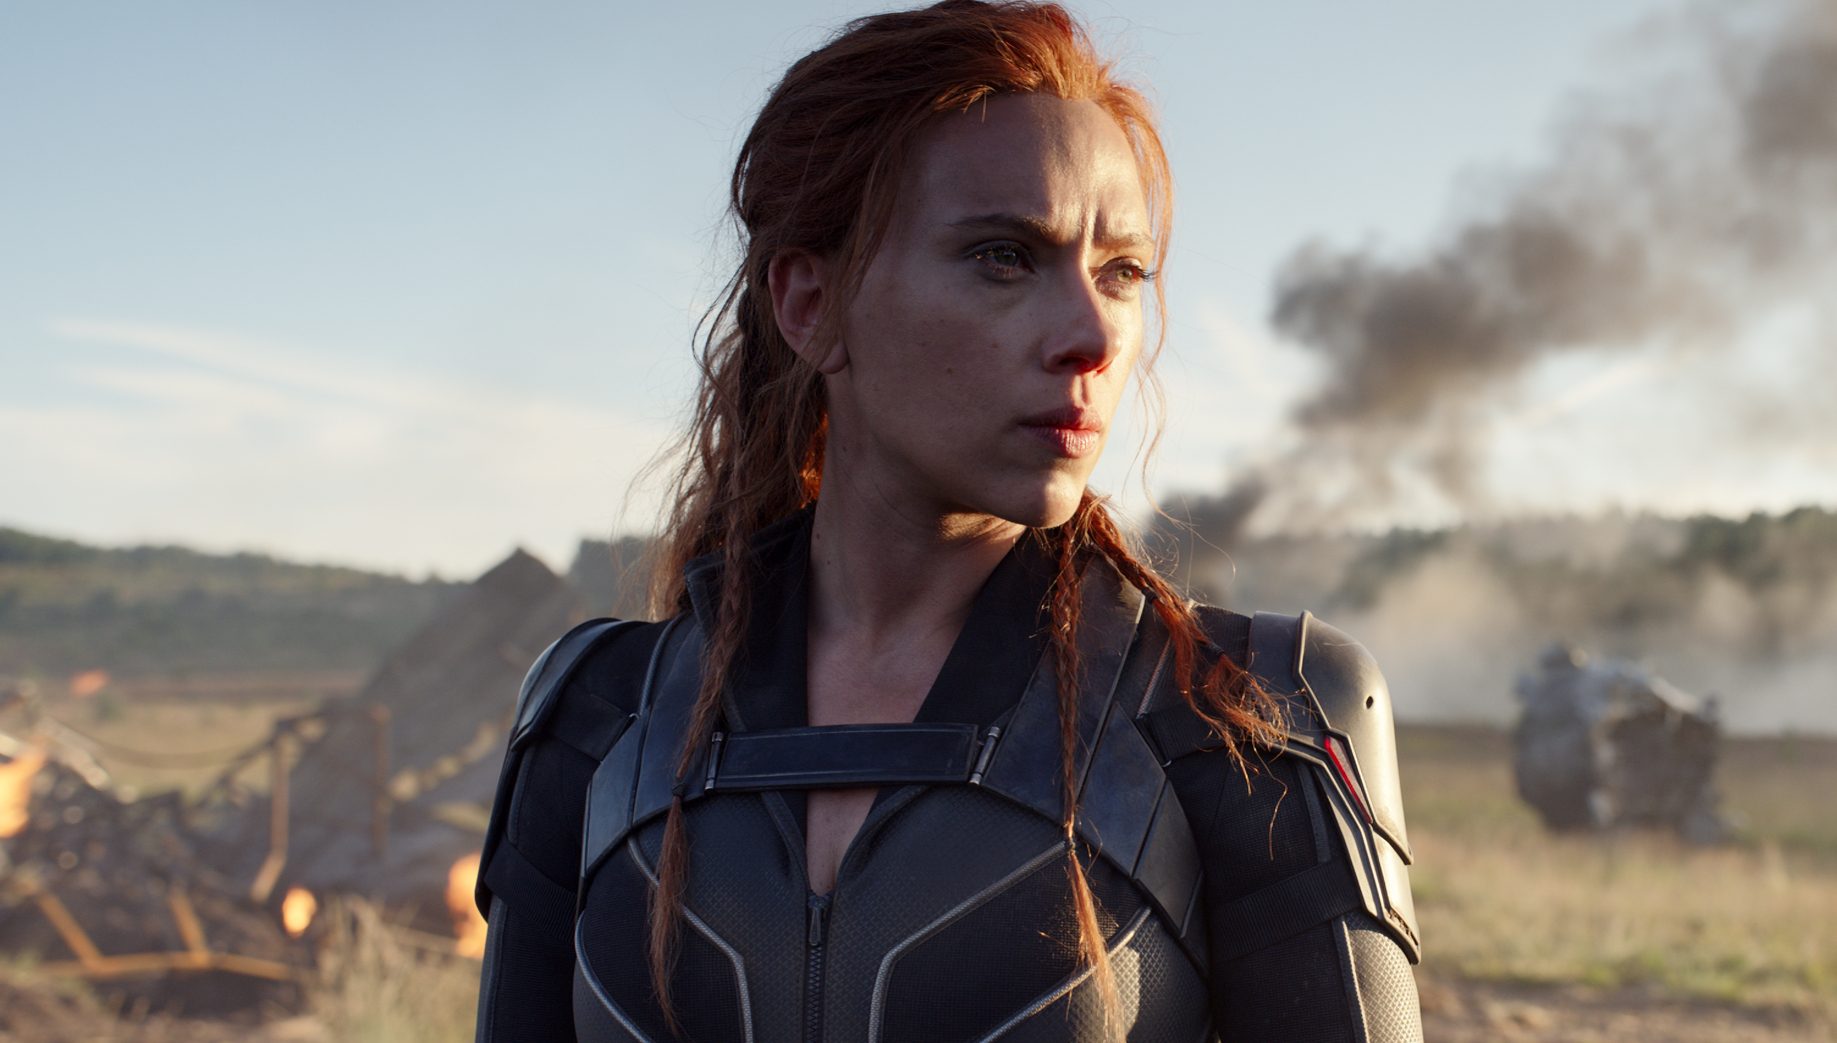 'Black Widow' star Scarlett Johansson as Natasha Romanoff standing in front of smoke